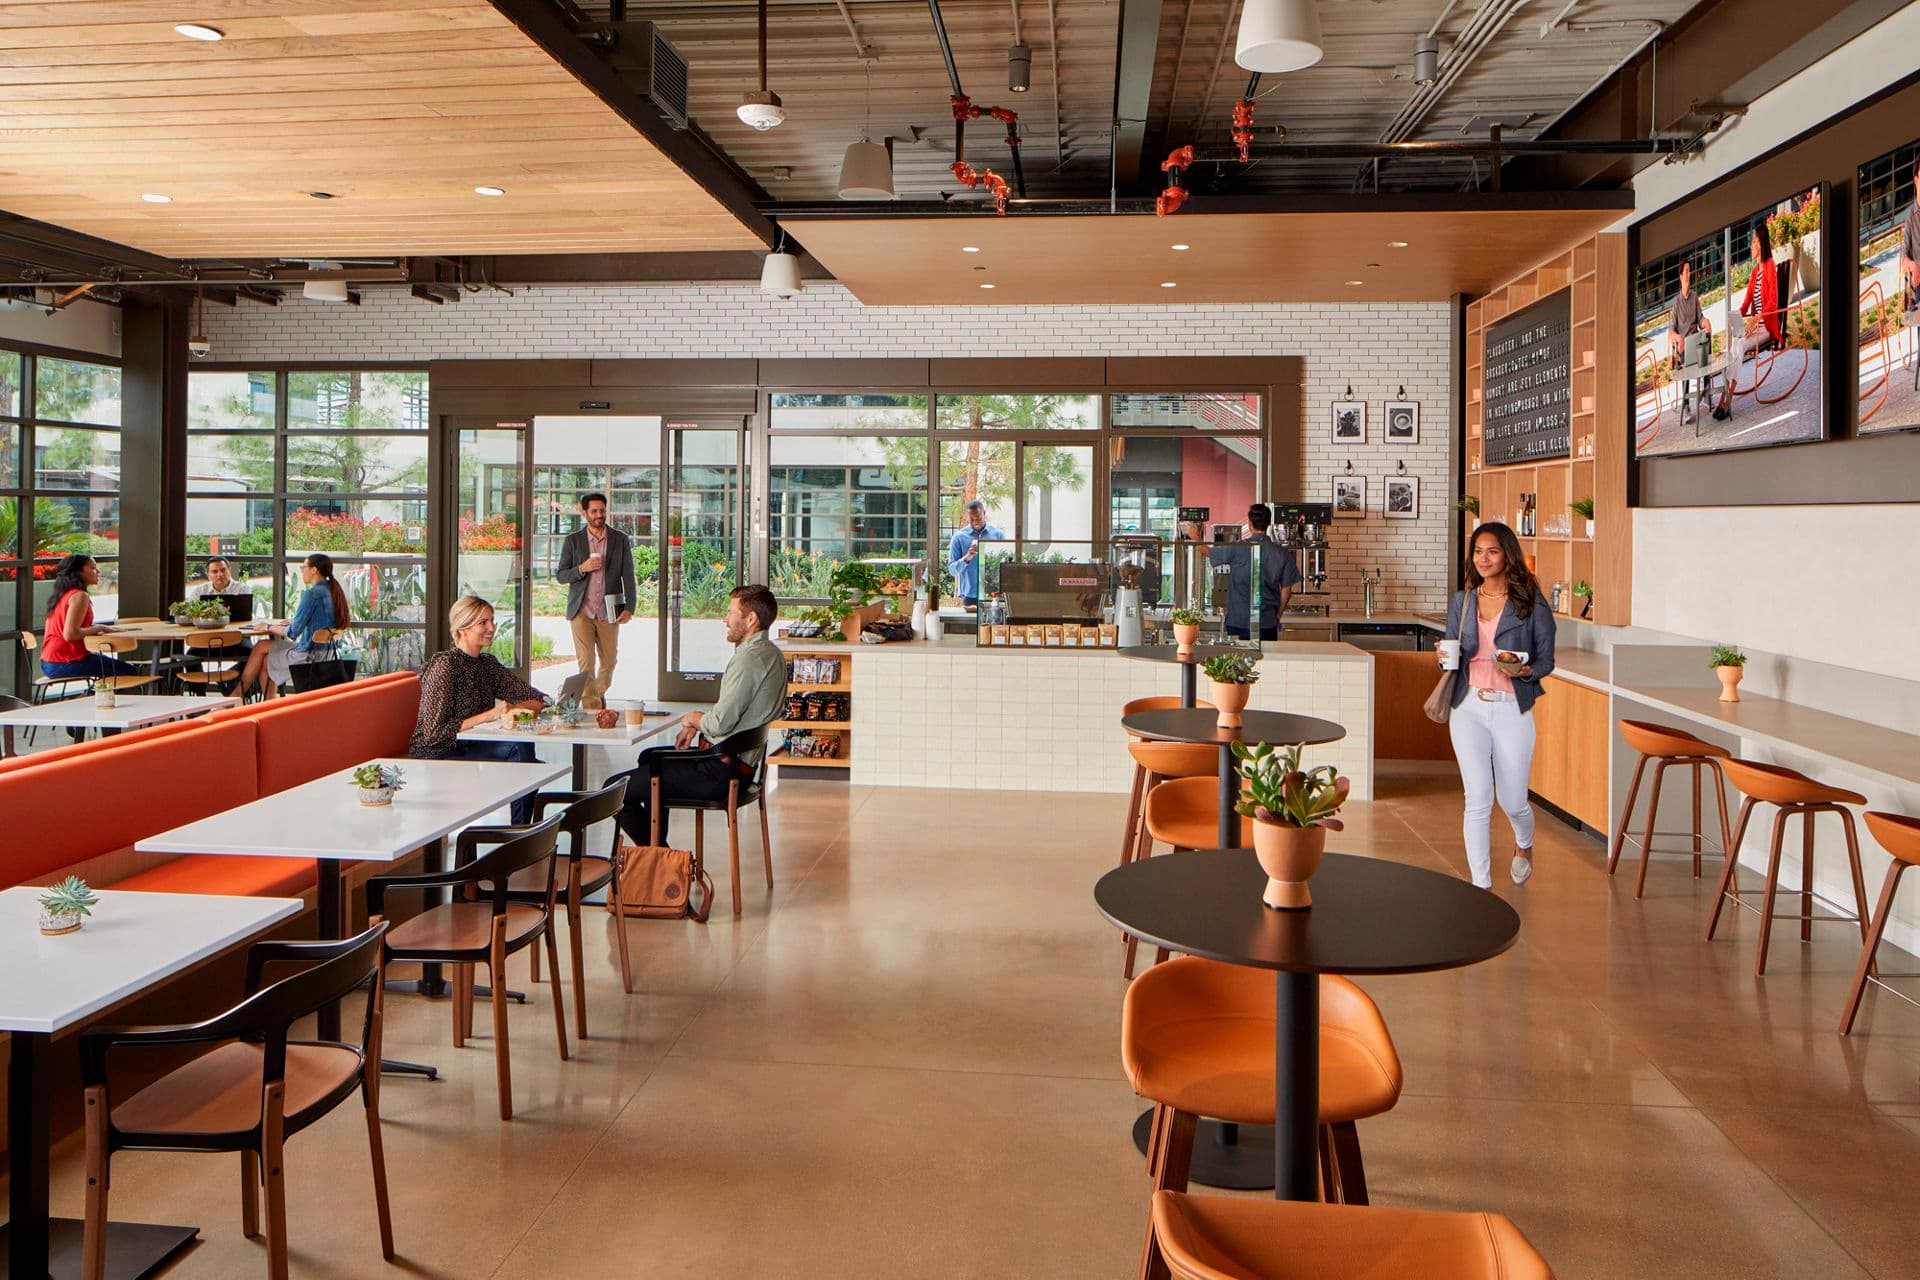 Olive Grove Cafe at Innovation Office Park, 100-450 Progress  Irvine, CA 92618